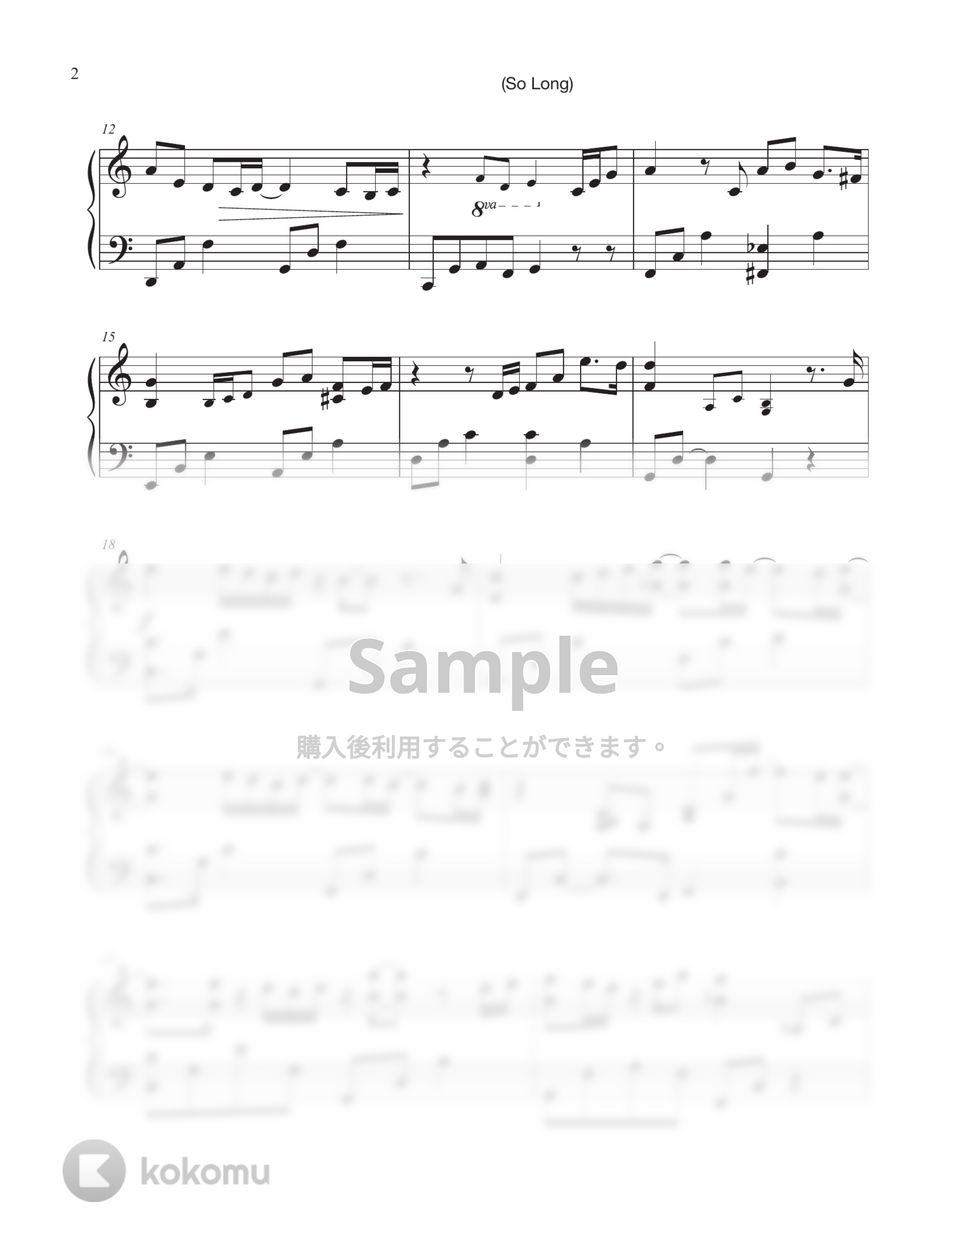 Paul Kim - So Long (안녕) (ホテルデルーナ OST) by Tully Piano